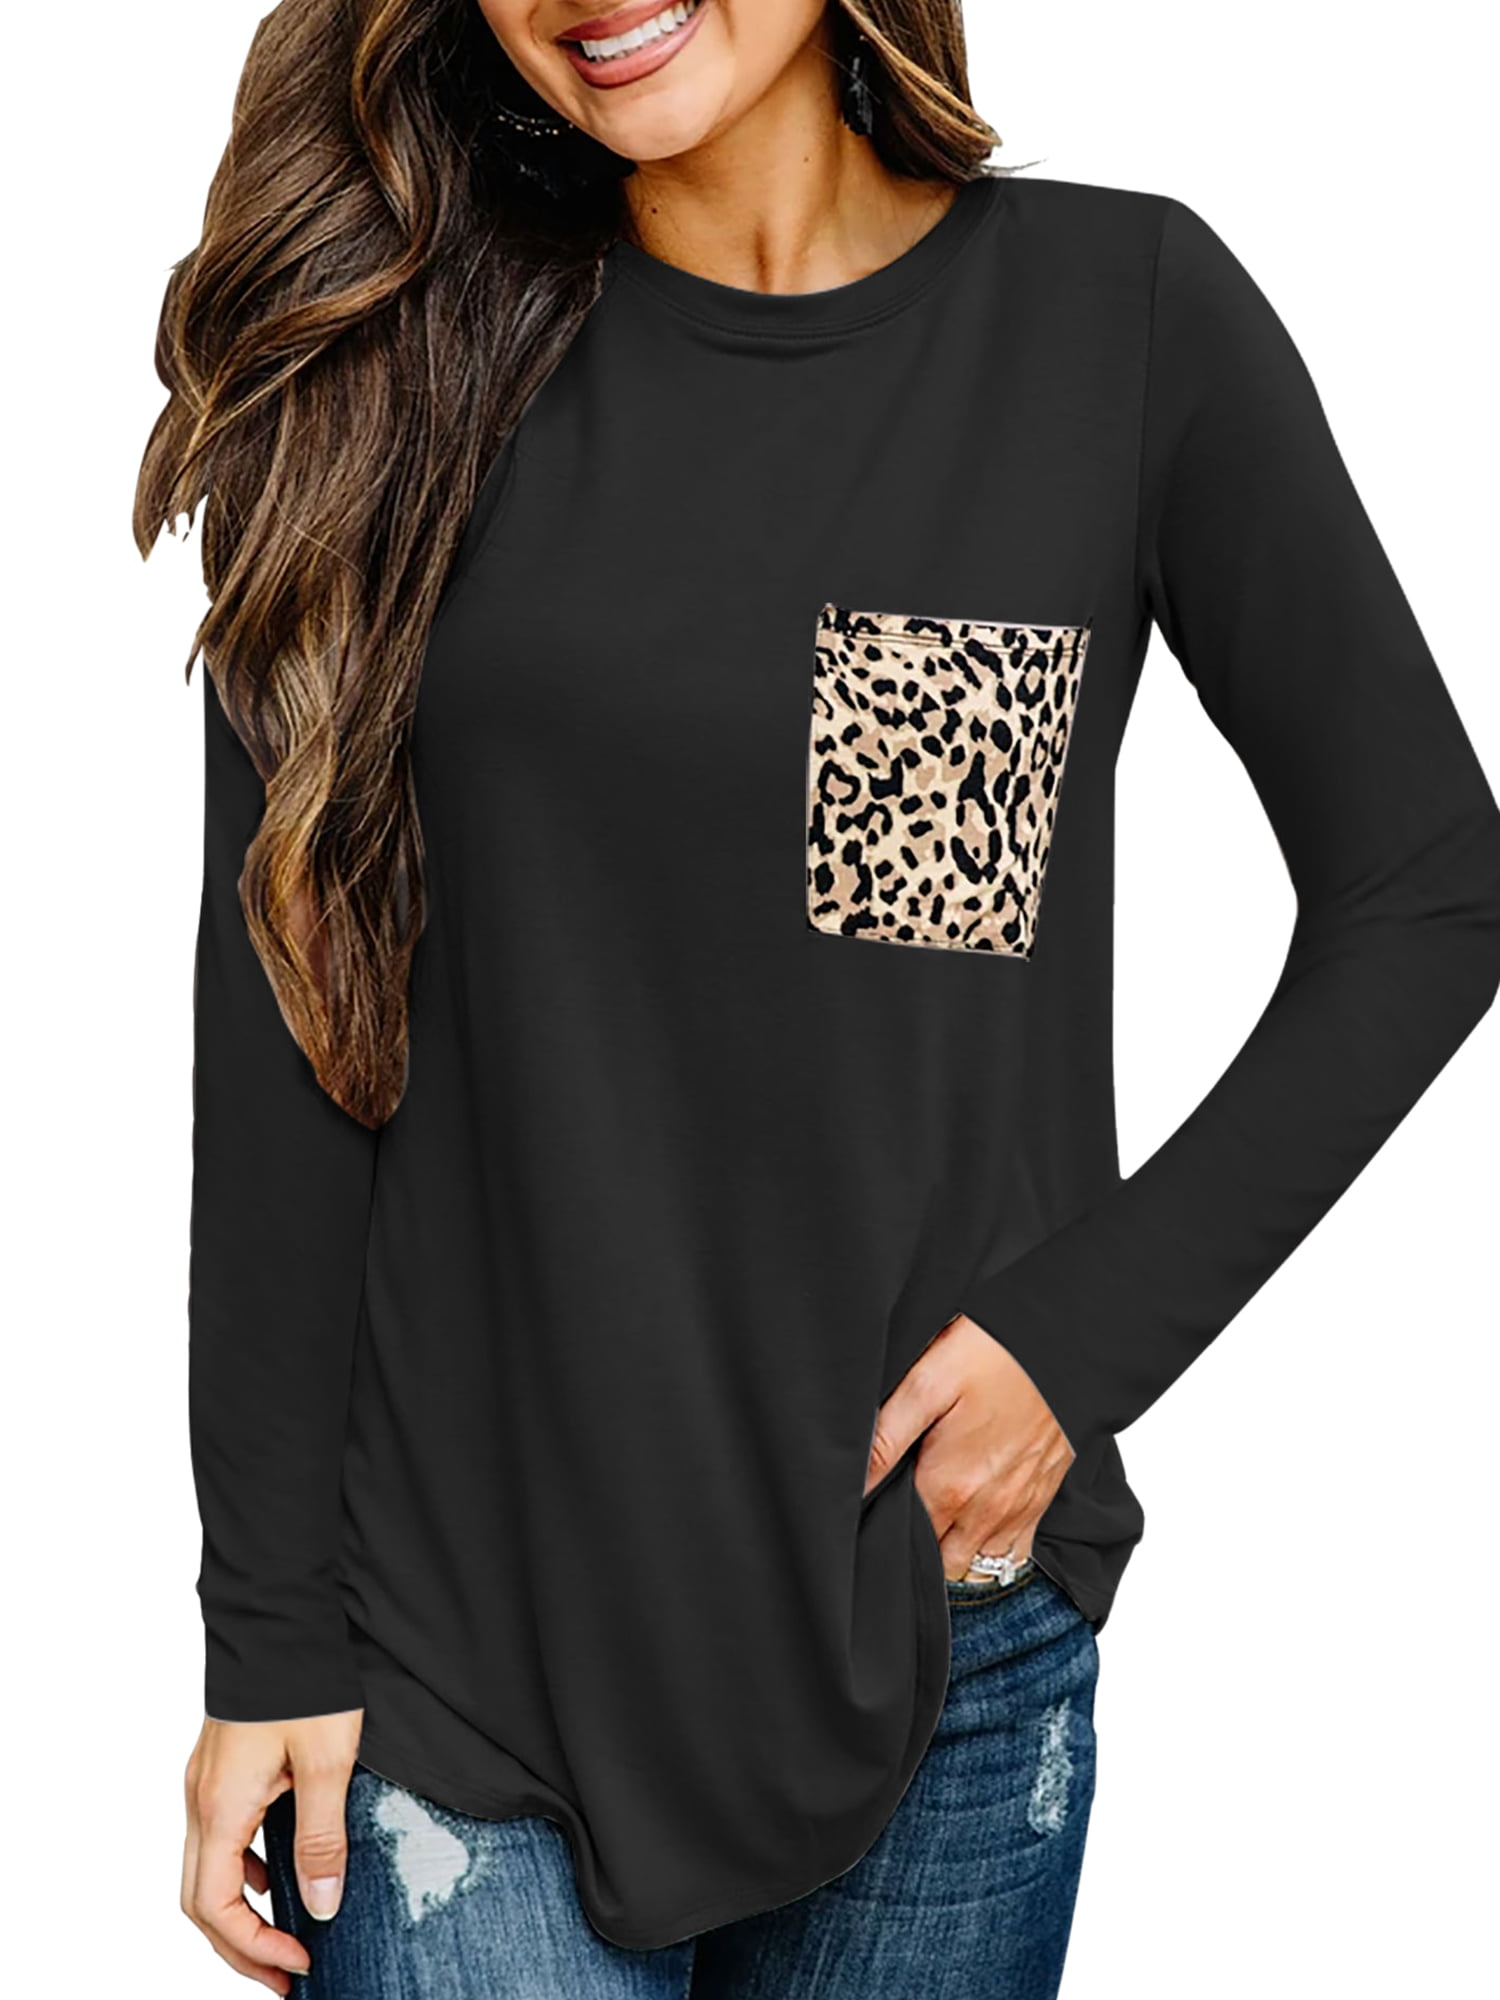 Onegirl Women Casual Leopard Stripe Splicing Long Sleeve Loose O Neck Tunic Top Shirts Blouse Sweatshirt Pullover